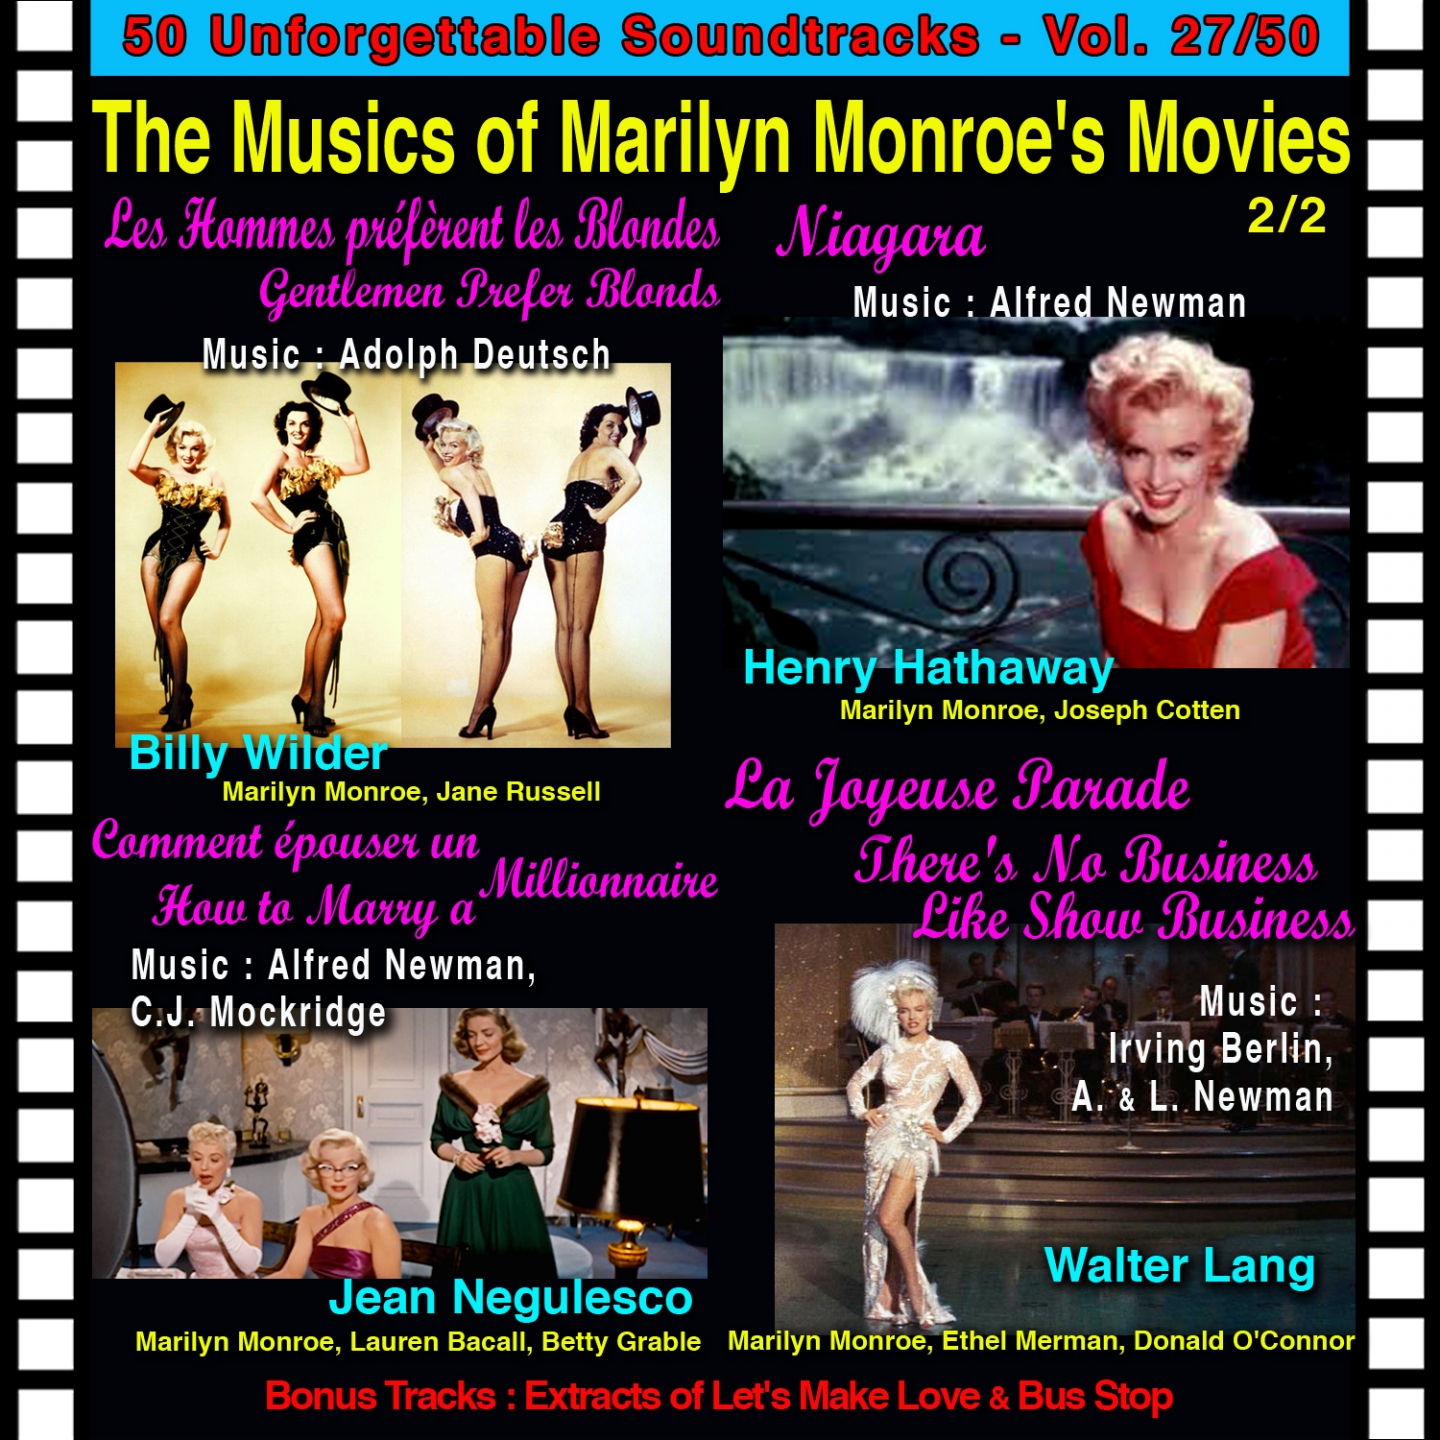 La Joyeuse Parade / There's No Business Like Show Business: There's No Business Like Show Business (Marilyn Music Movies (2 / 2))